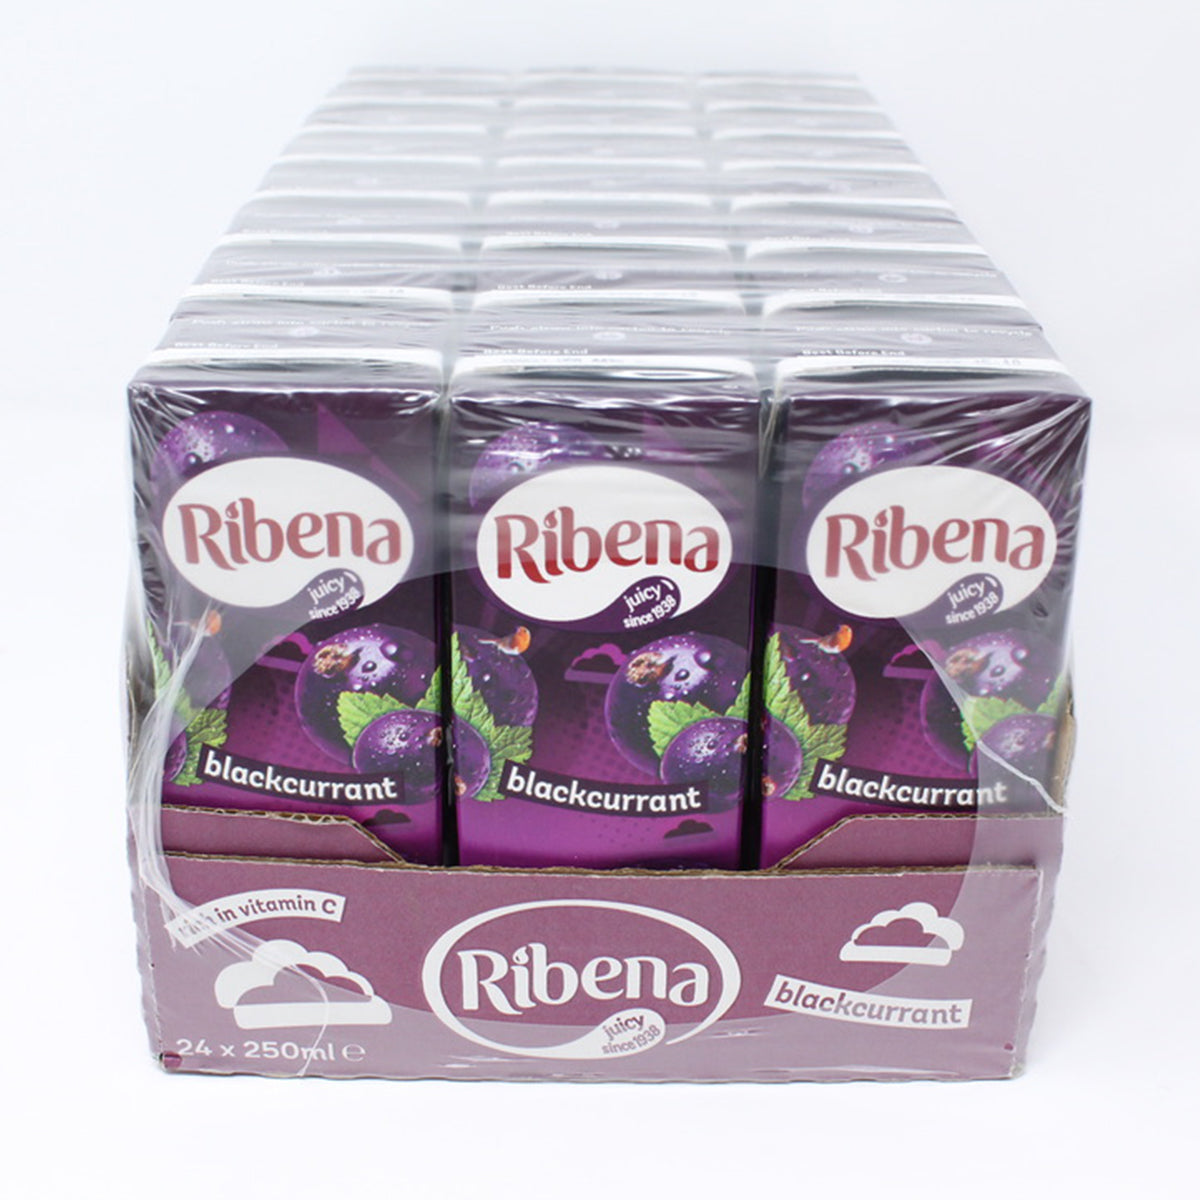 Ribena Ready to Drink Blackcurrant, 24 x 250ml Juice Costco UK   